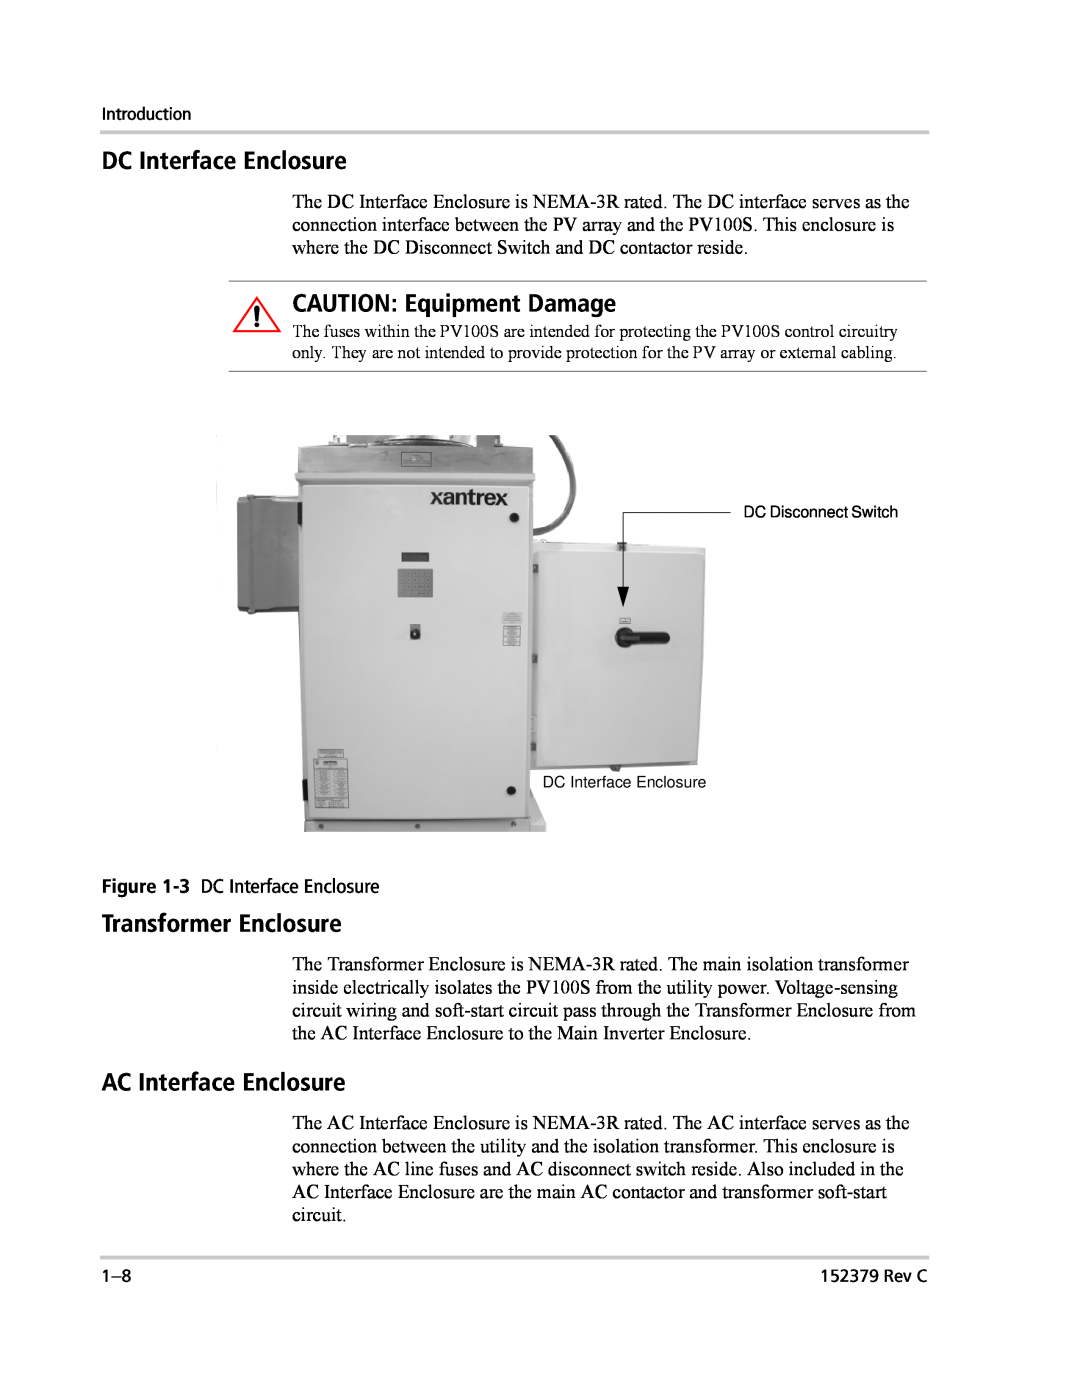 Xantrex Technology PV100S-208 manual DC Interface Enclosure, CAUTION Equipment Damage, Transformer Enclosure 